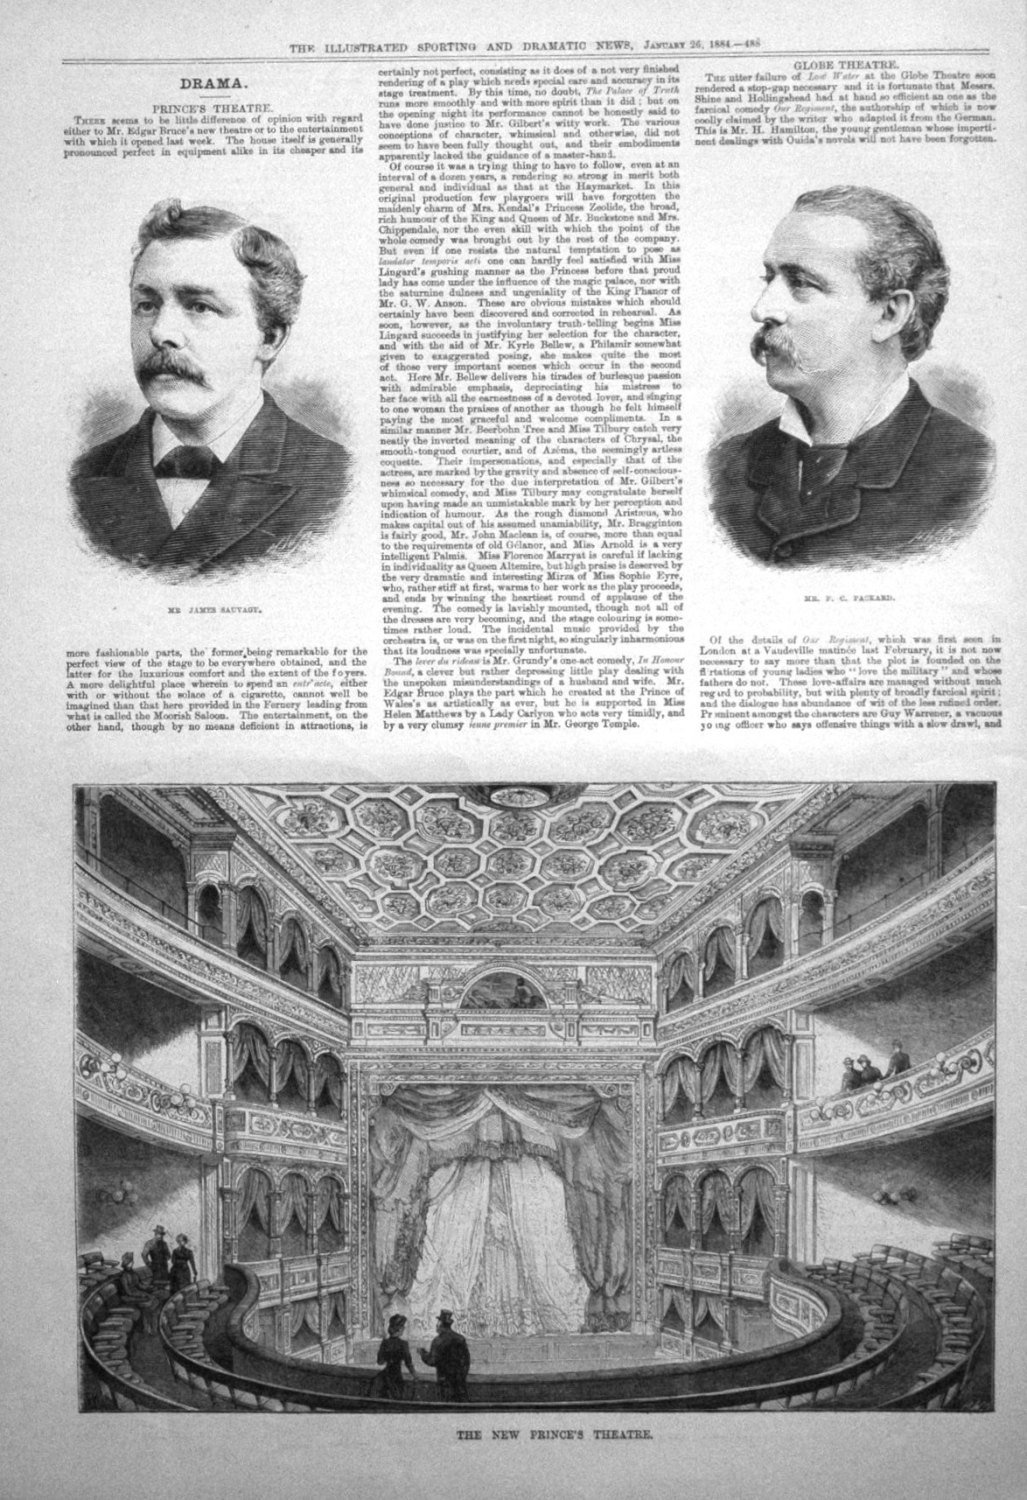 The New Prince's Theatre. 1884